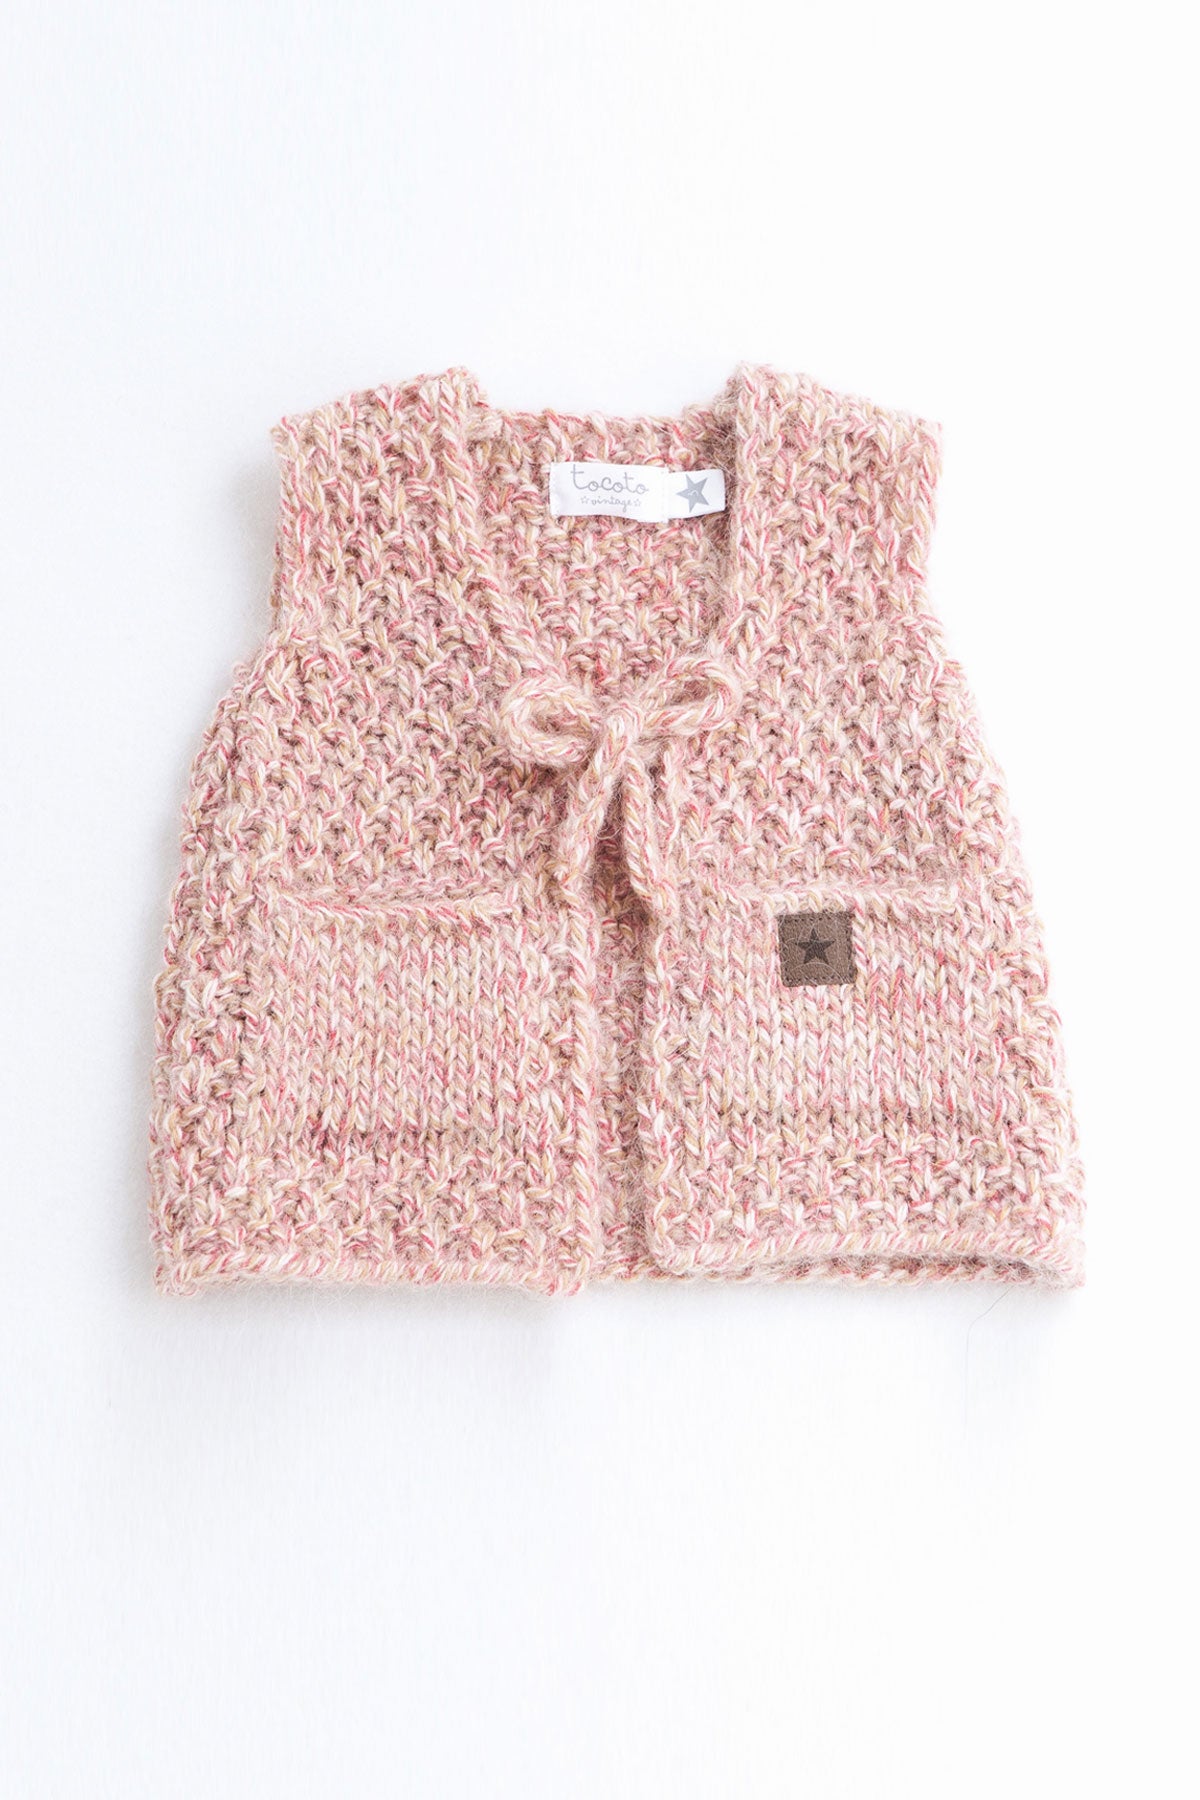 Caroline dinosaurus vitaliteit Tocoto Vintage Baby Girls Knit Vest (Size 6M left) – Mini Ruby